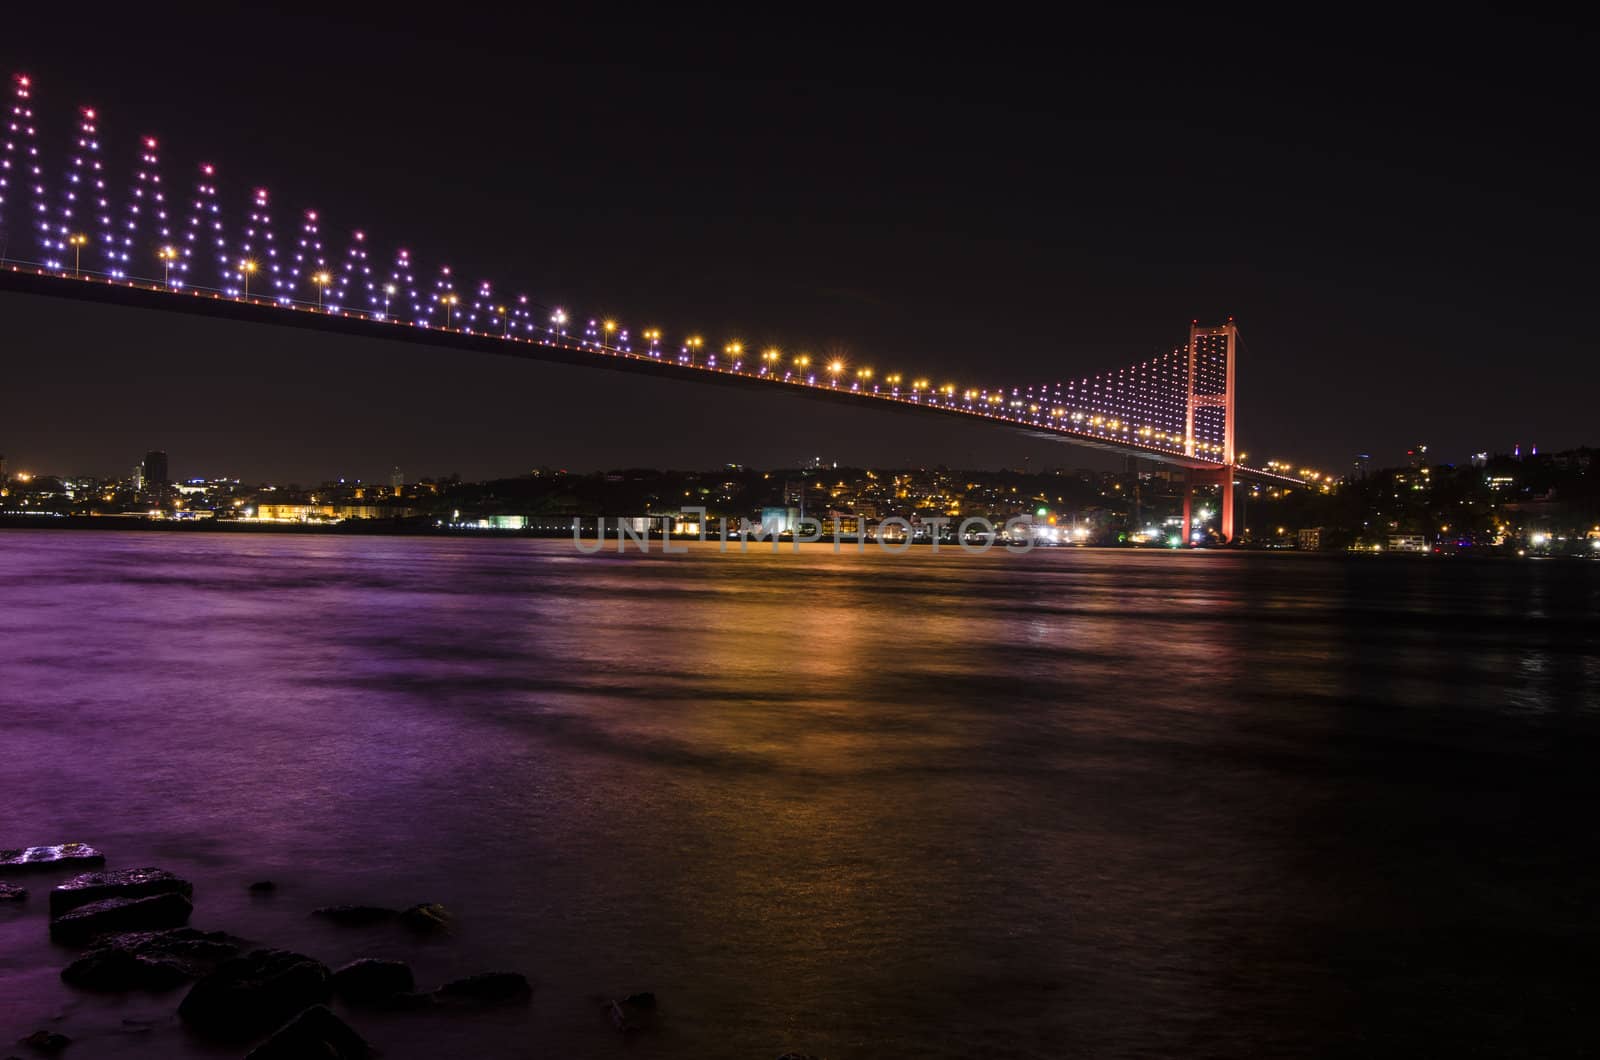 Night view of Bosphorus Bridge by capa34